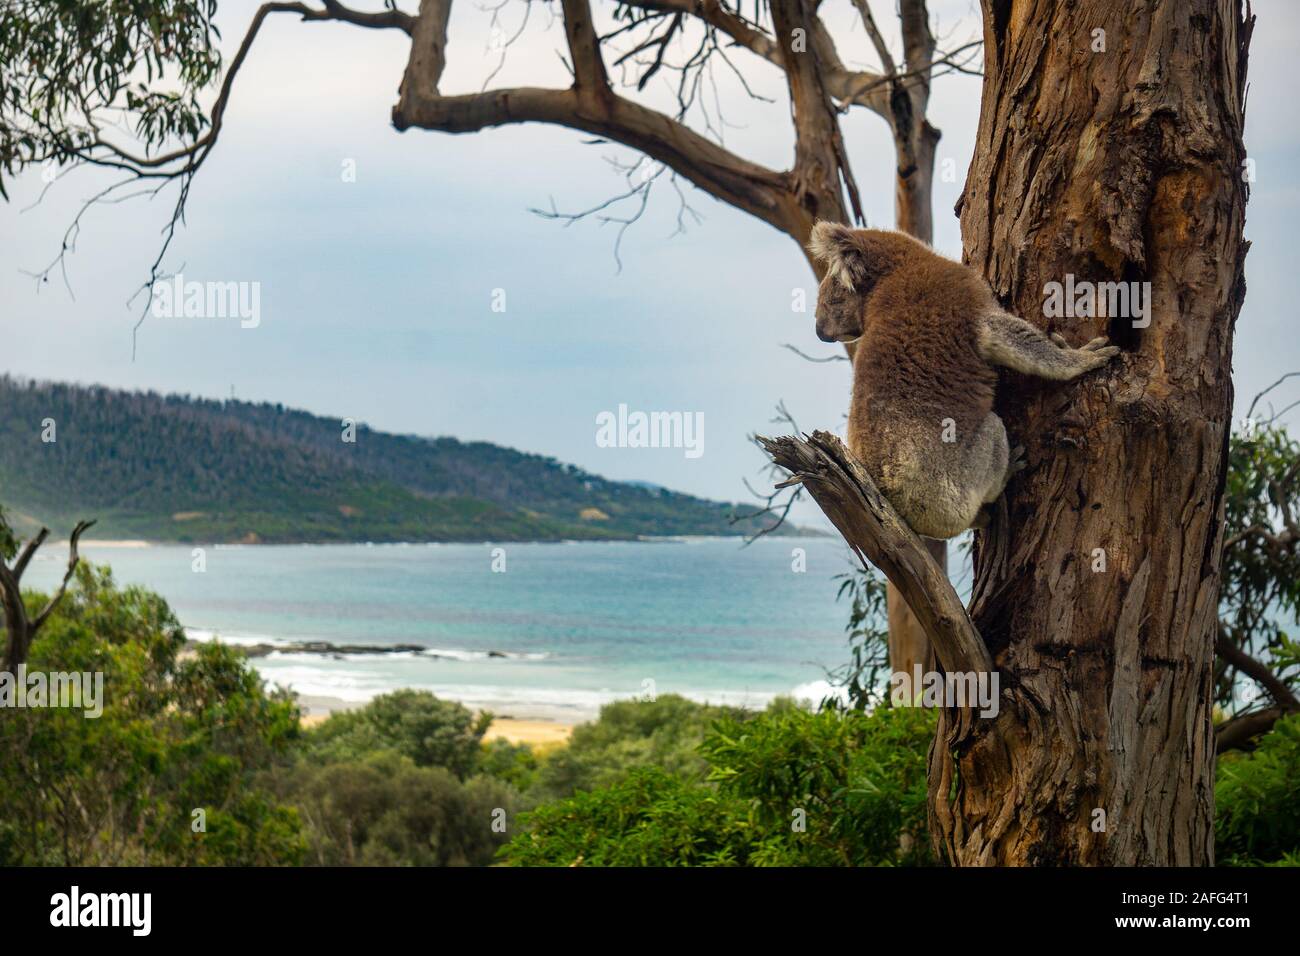 A koala (Phascolarctos cinereus) looks over the rugged coastline along the Great Ocean Road at Kennett River near Lorne in Victoria, Australia Stock Photo